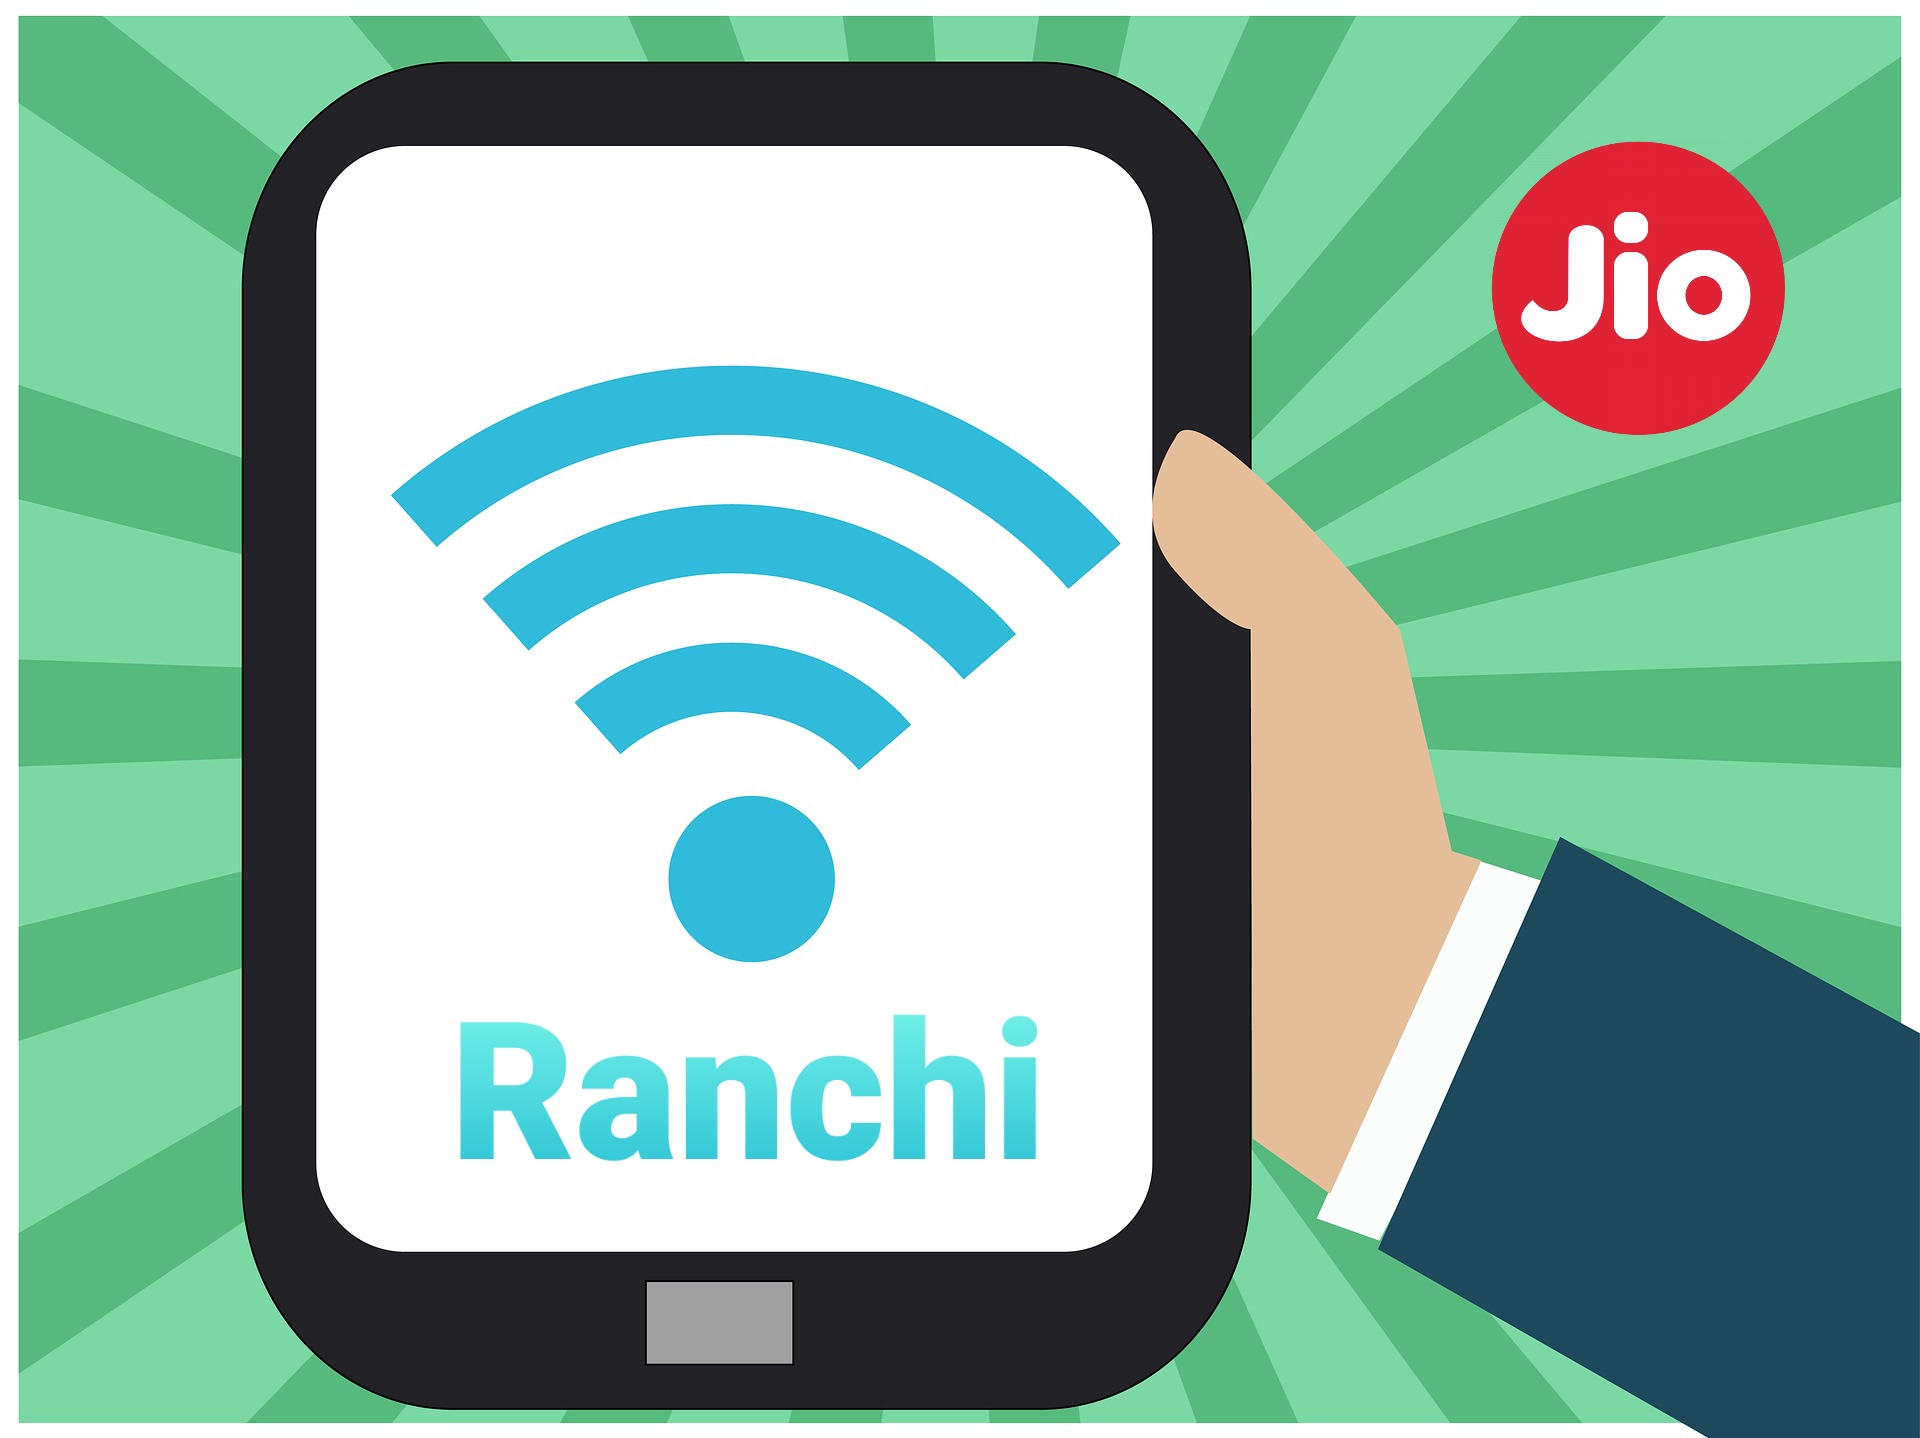 JioFiber Ranchi Registration, Offers, Plans, Customer Care